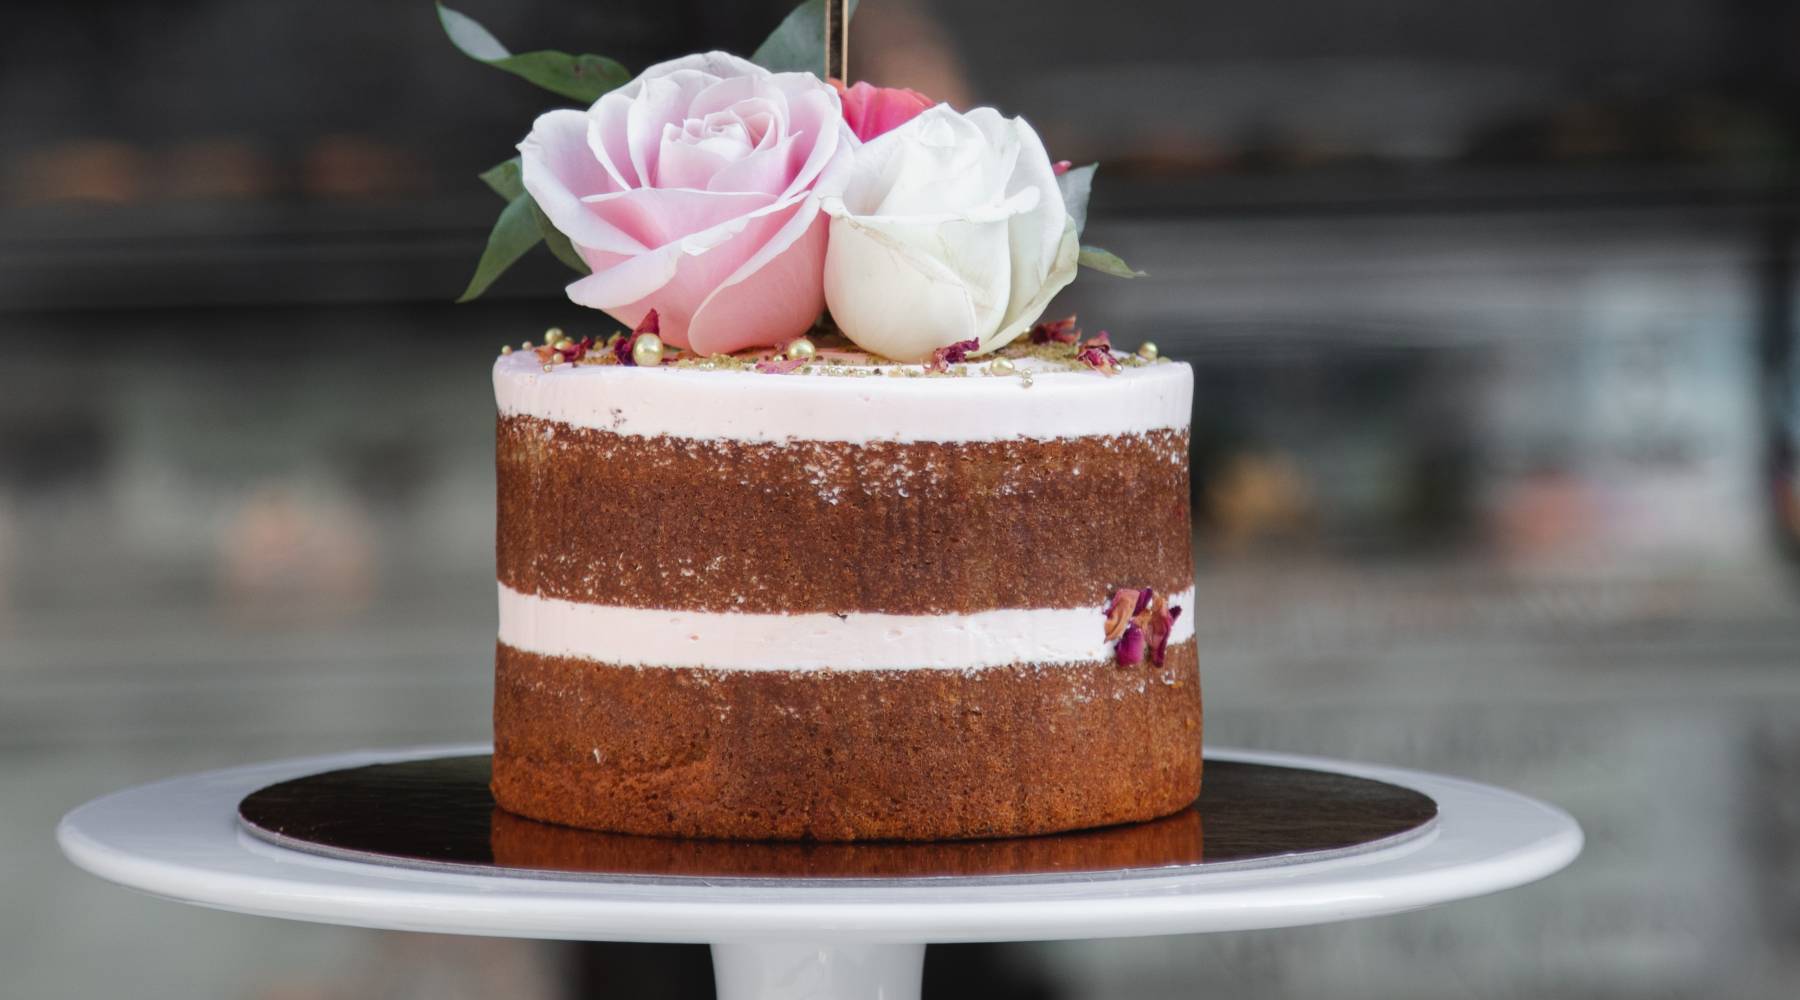 Macaron and Drip - Classic Cake - The Cake Eating Company NZ